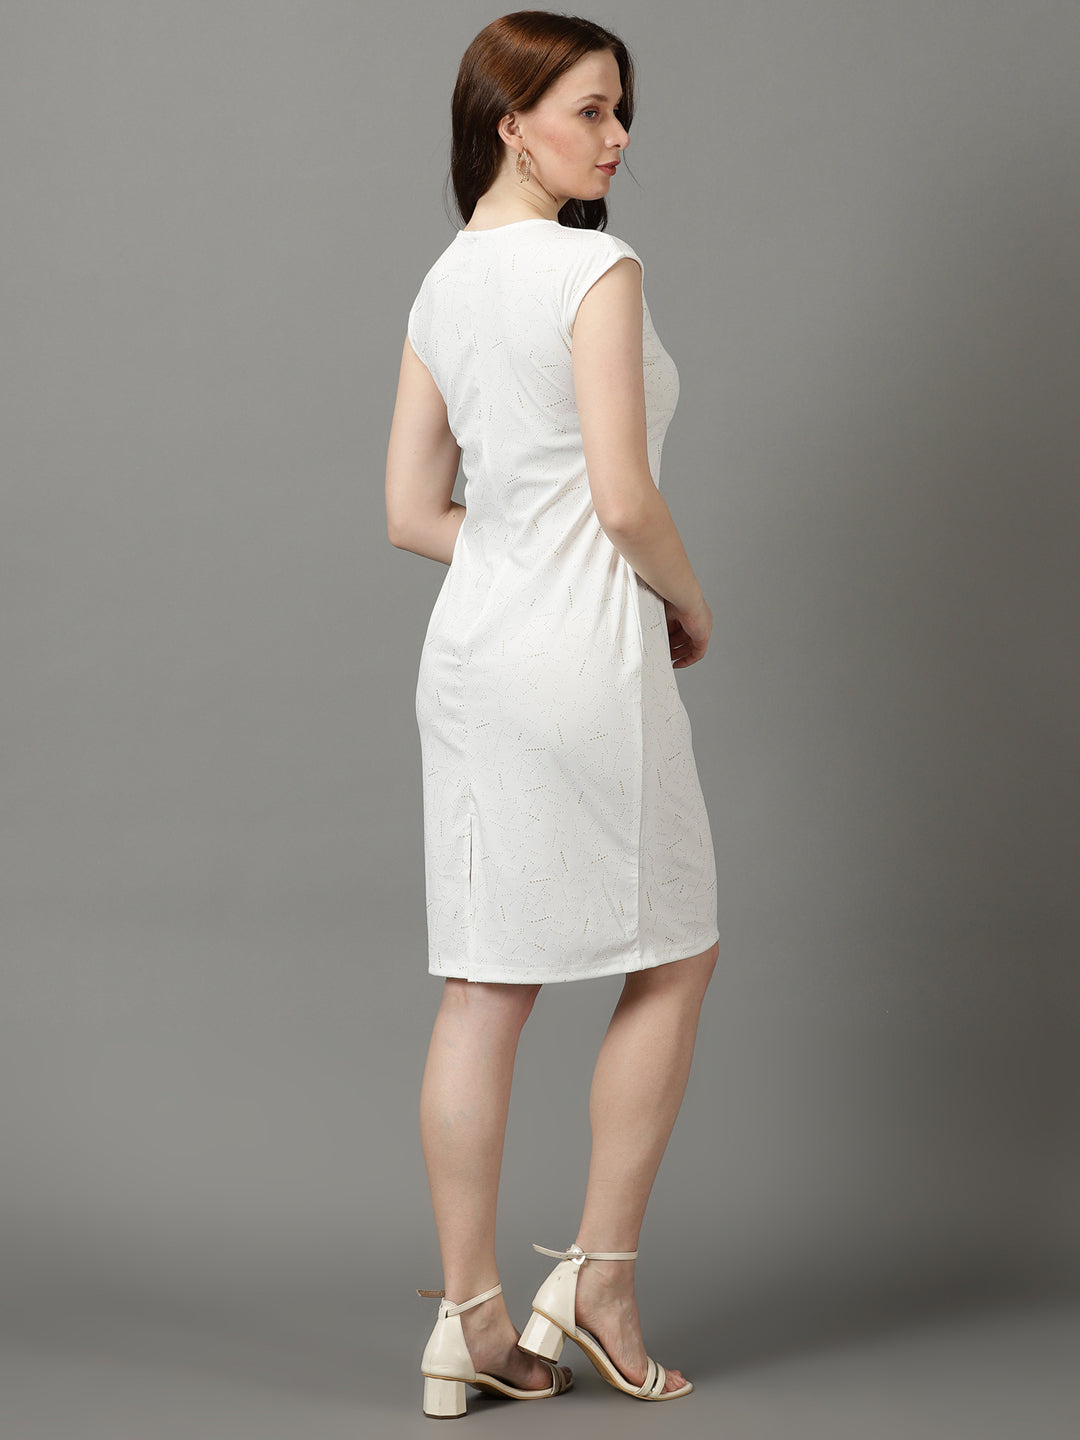 Women's White Embellished Bodycon Dress